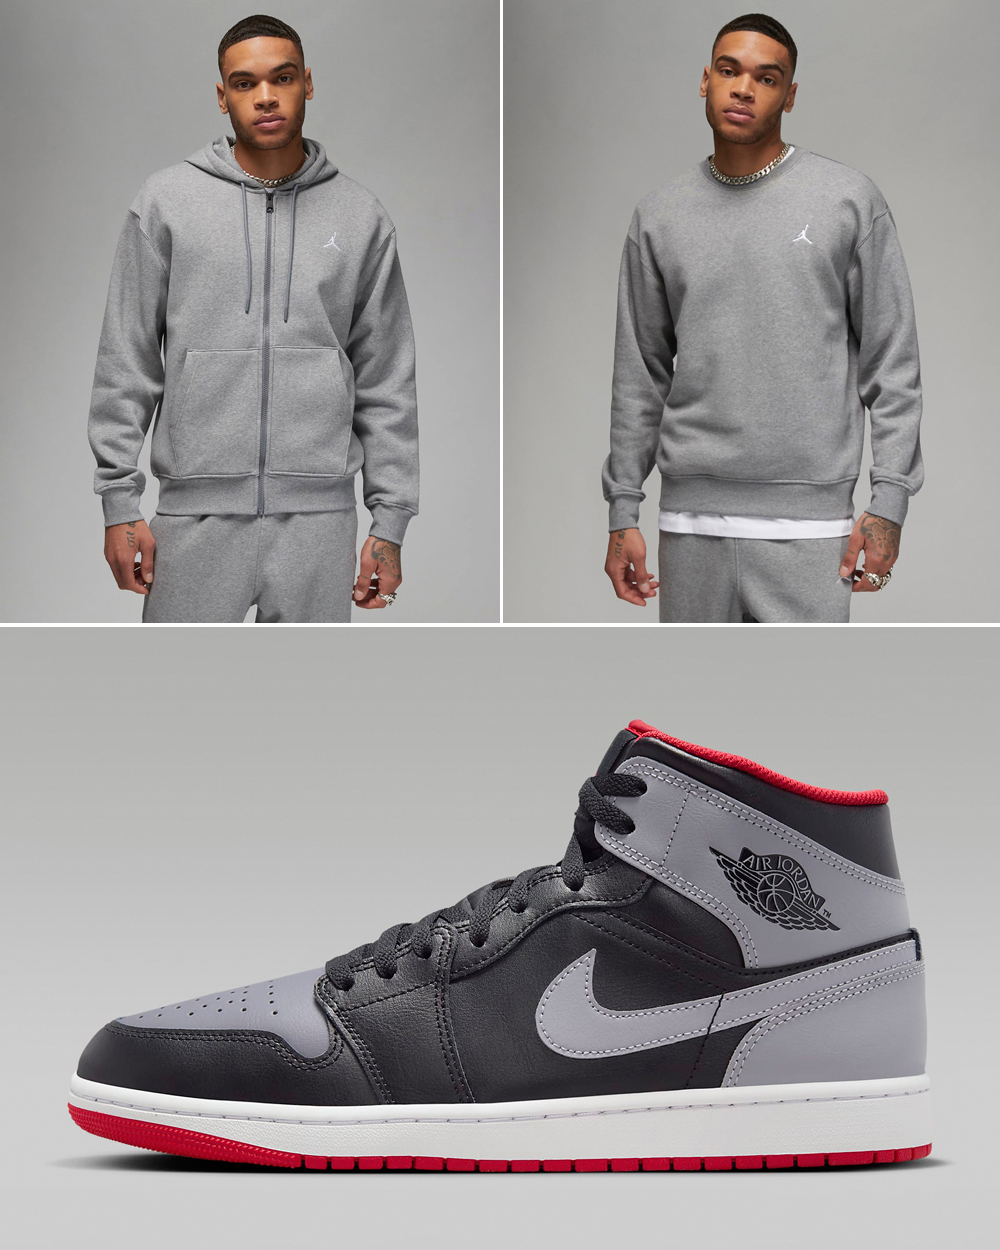 Air-Jordan-1-Mid-Black-Fire-Red-Cement-Grey-Clothing-Match